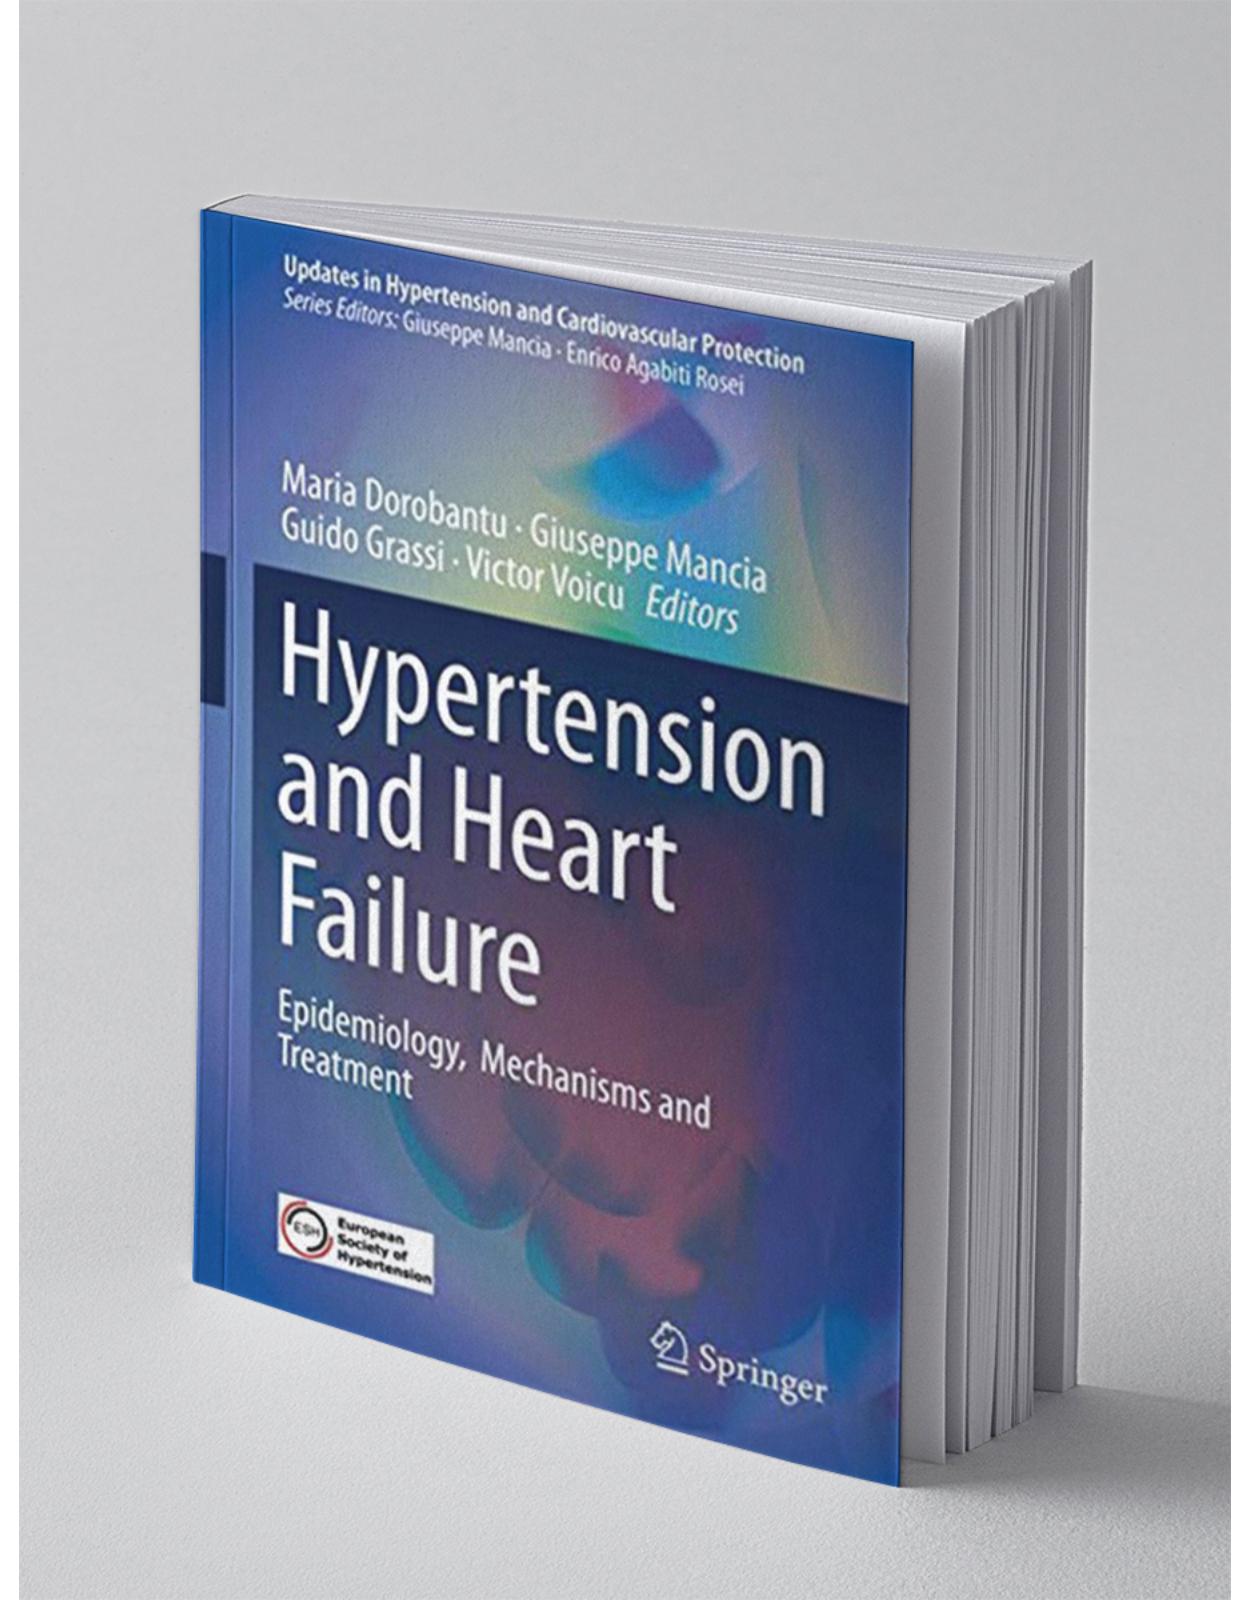 Hypertension and Heart Failure Epidemiology, Mechanisms and Treatment